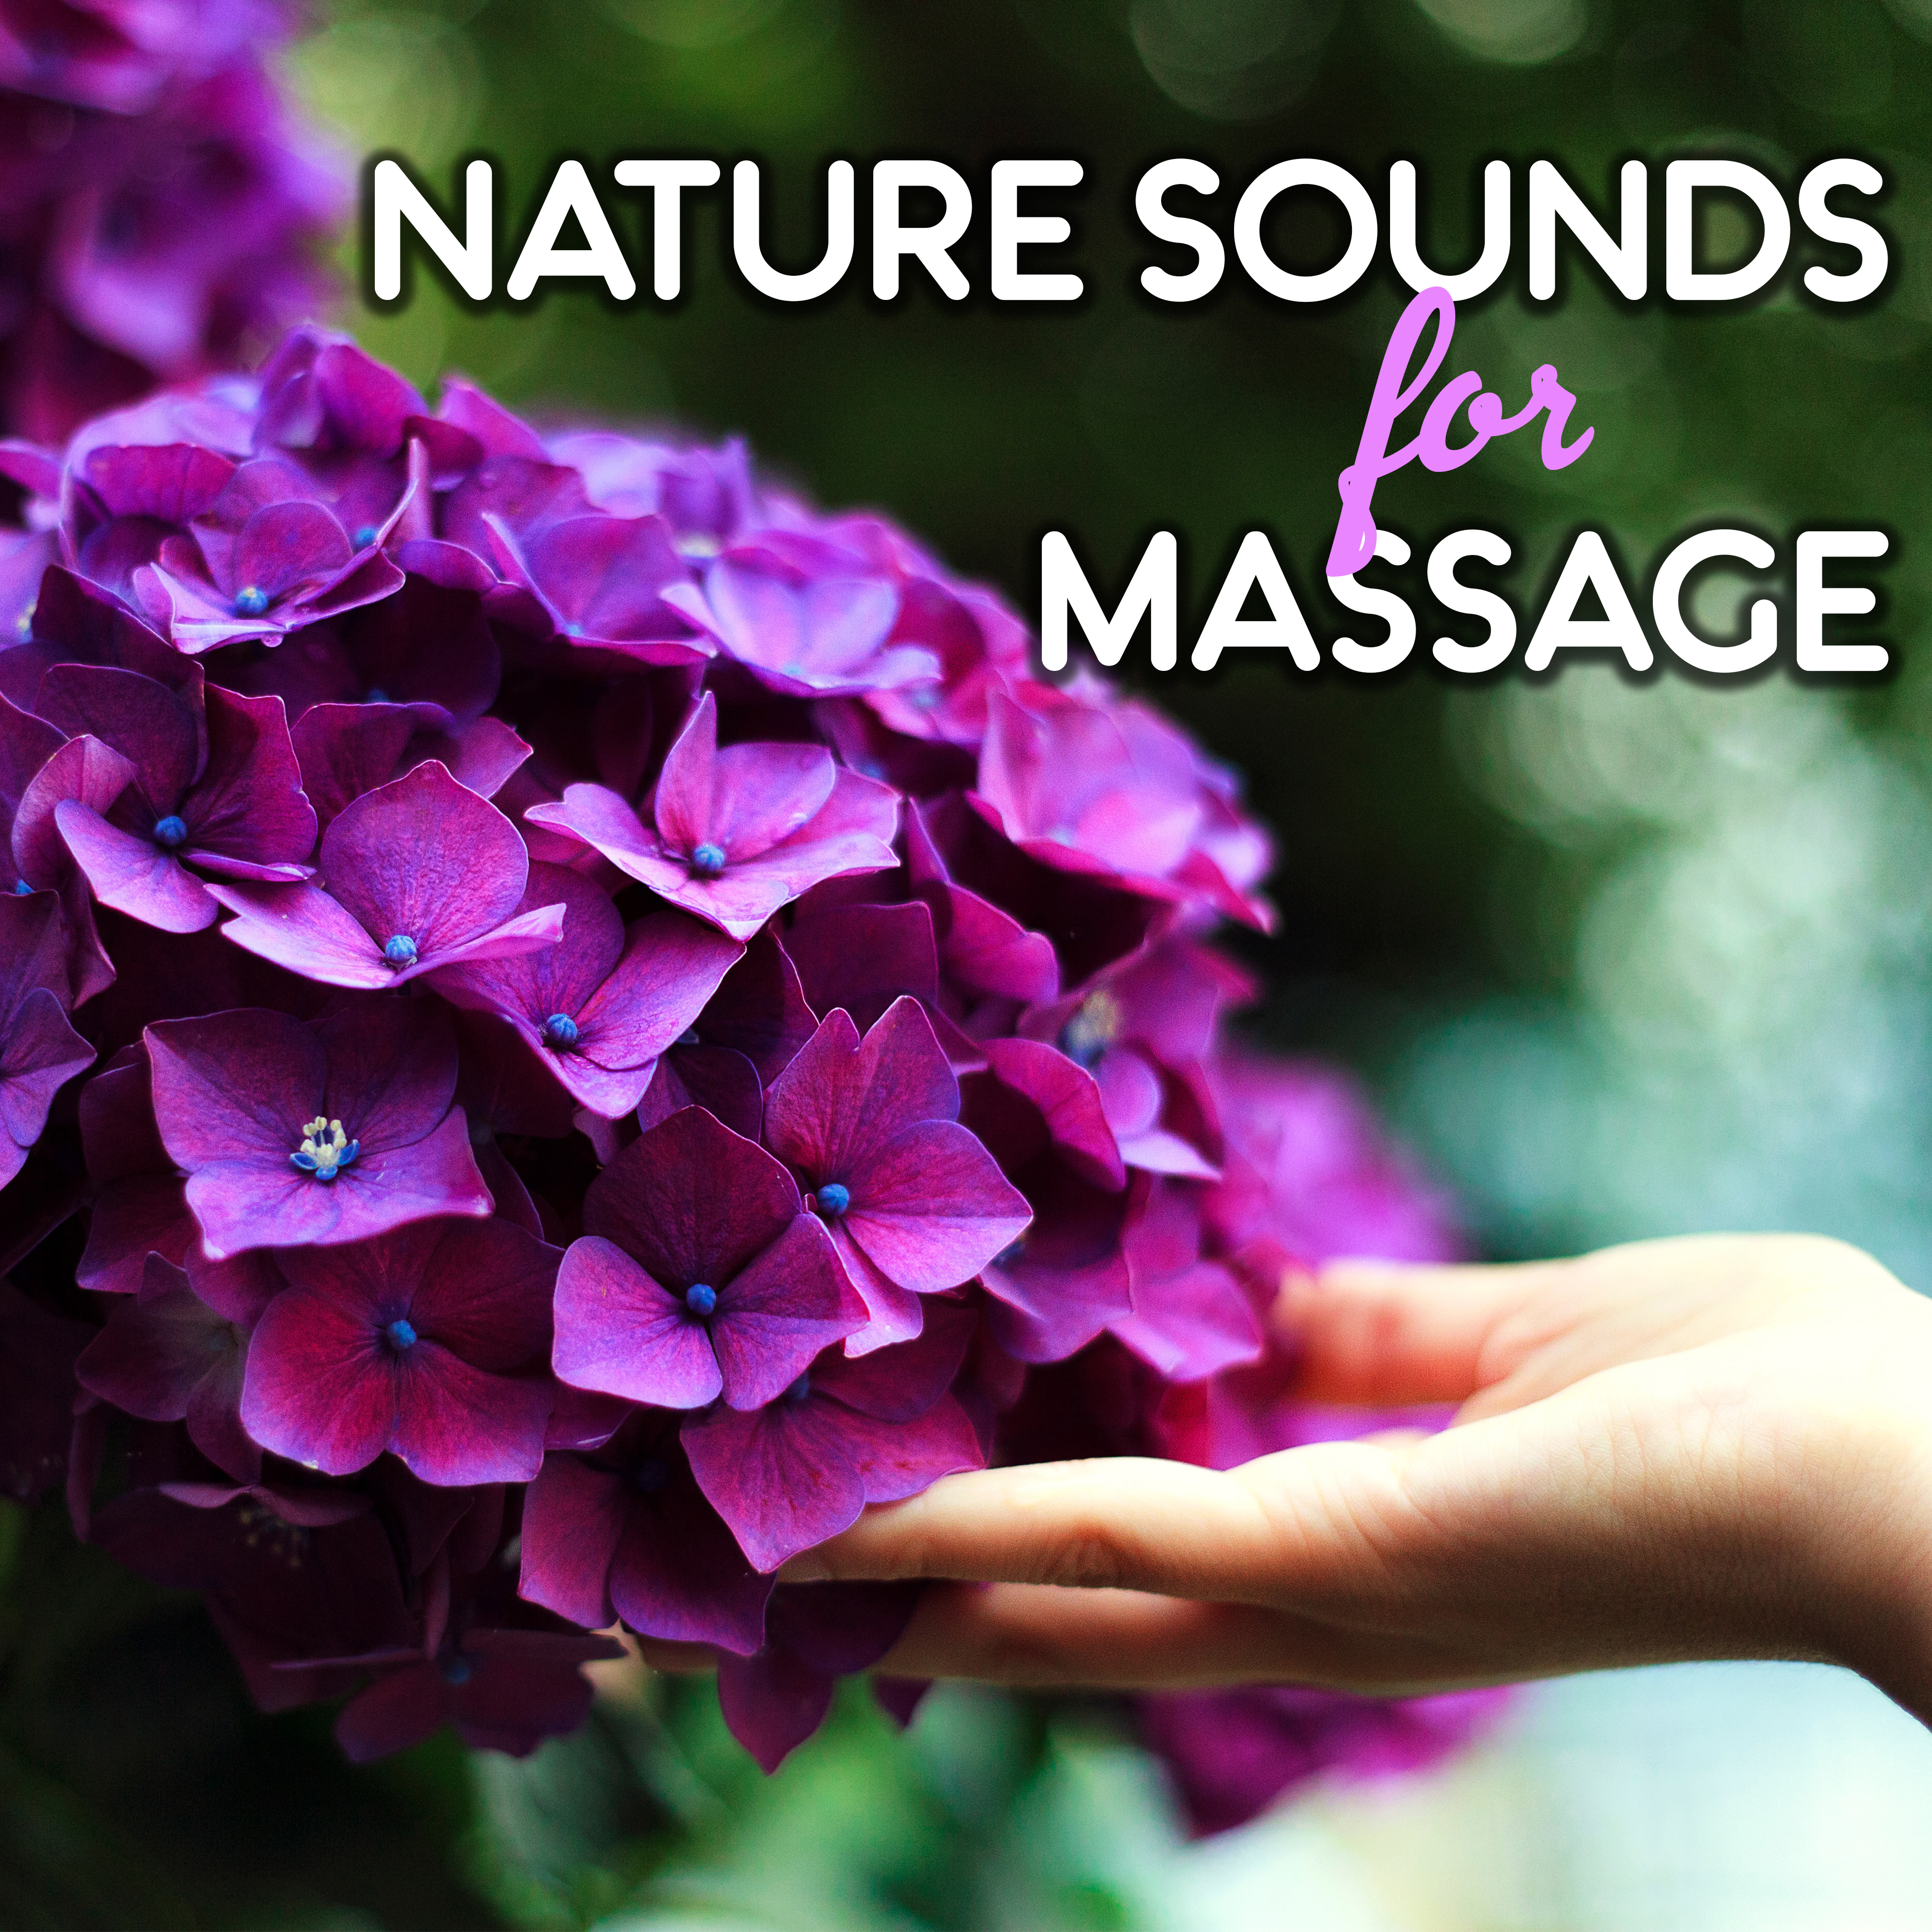 Nature Sounds for Massage – Soft Sounds for Spa, Relaxing Massage, Stress Free, Spirit Calmness